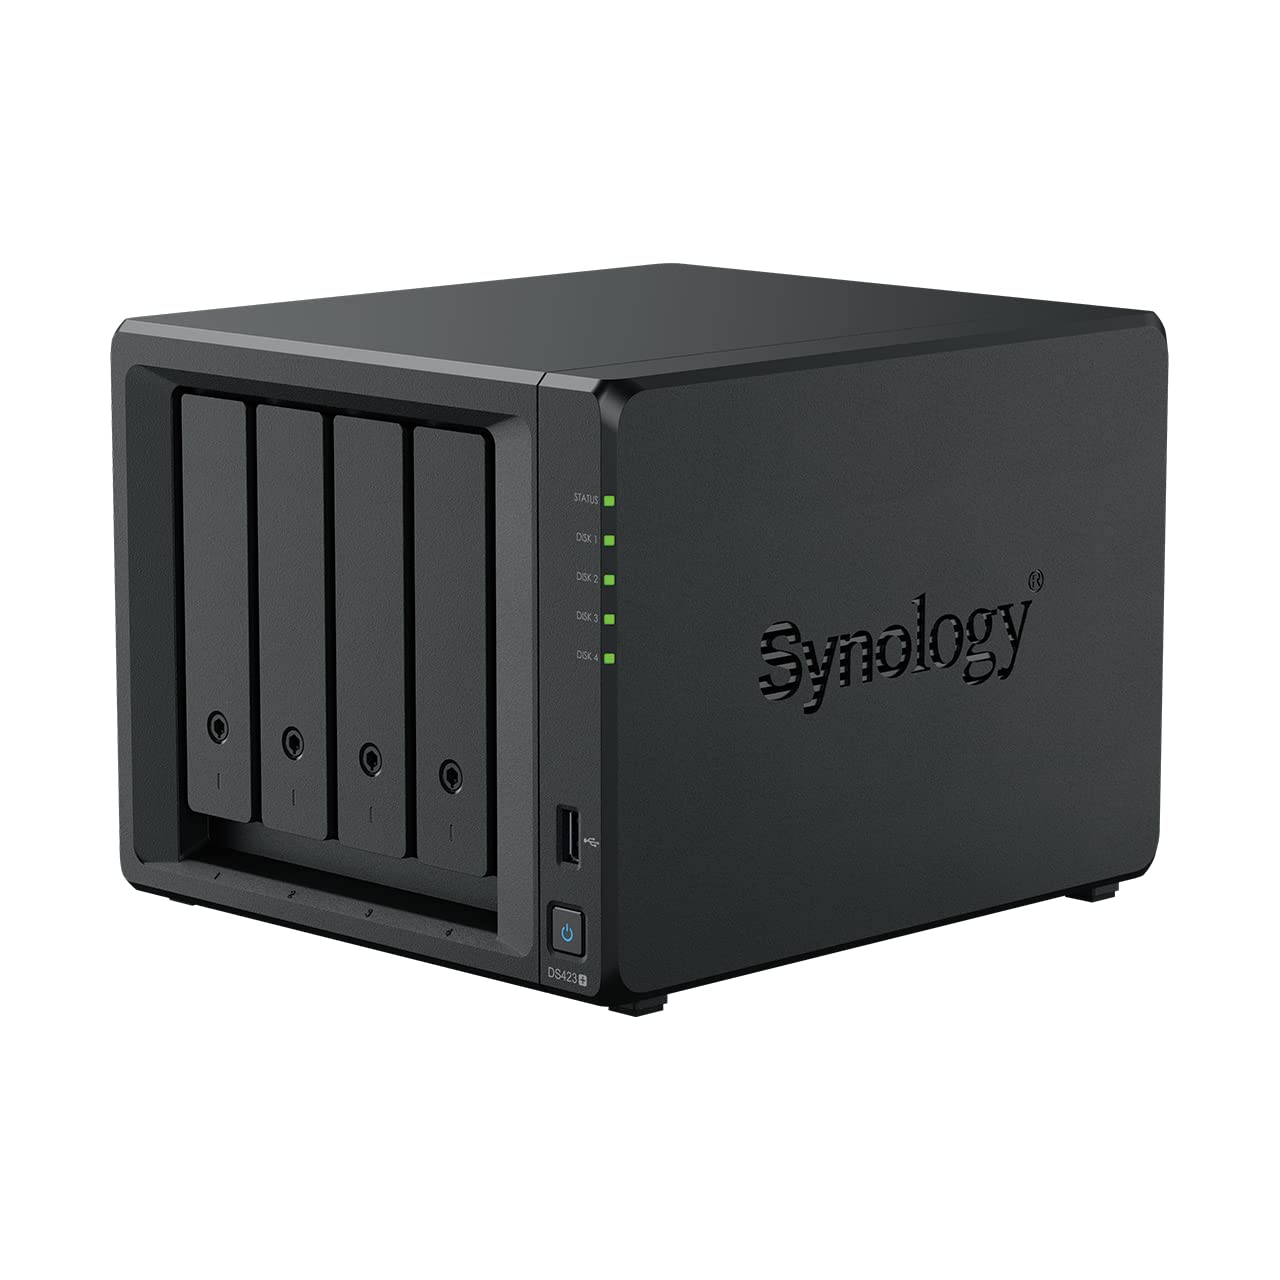 Synology 4-Bay DiskStation DS423+ (Diskless), $369.99 @ Amazon